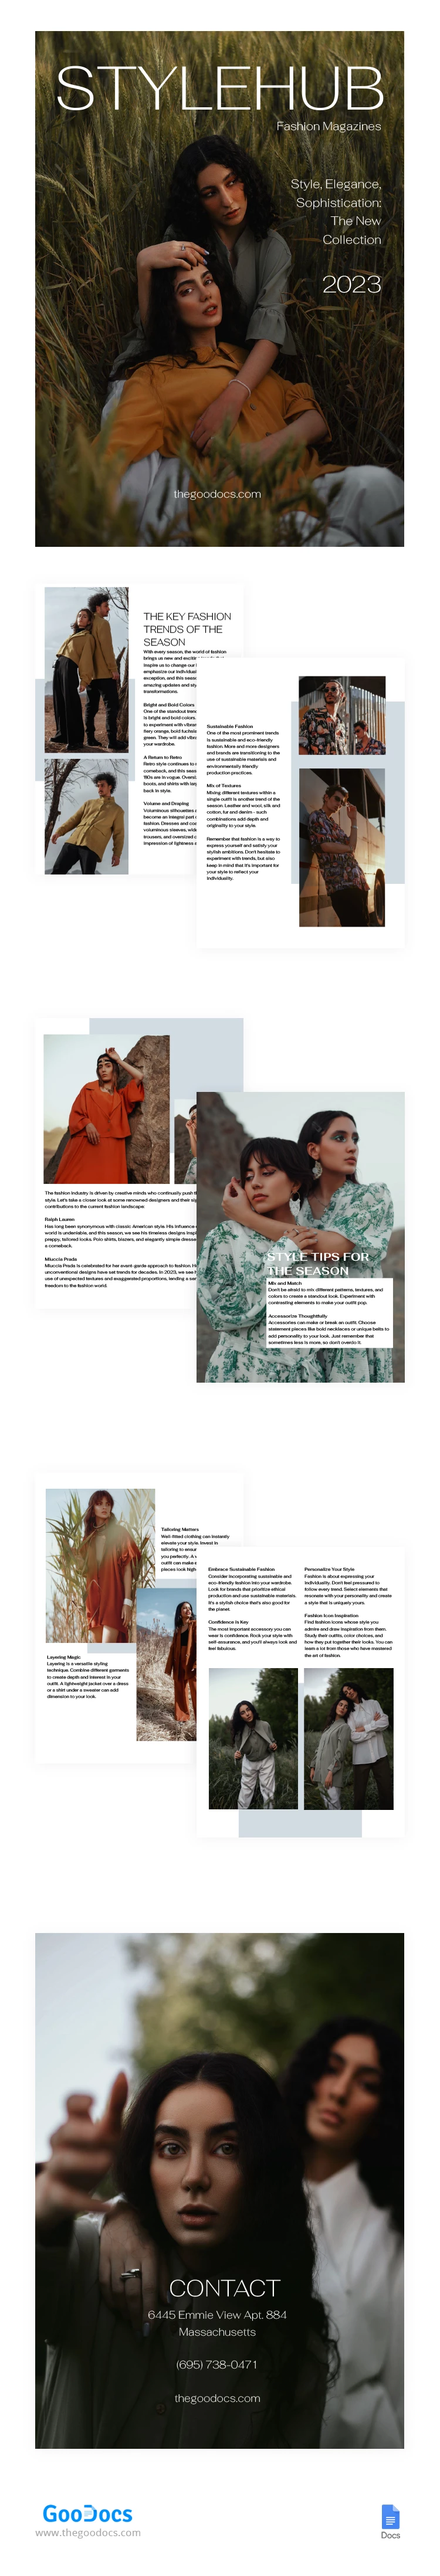 Rustic Retro Fashion Magazine - free Google Docs Template - 10067261